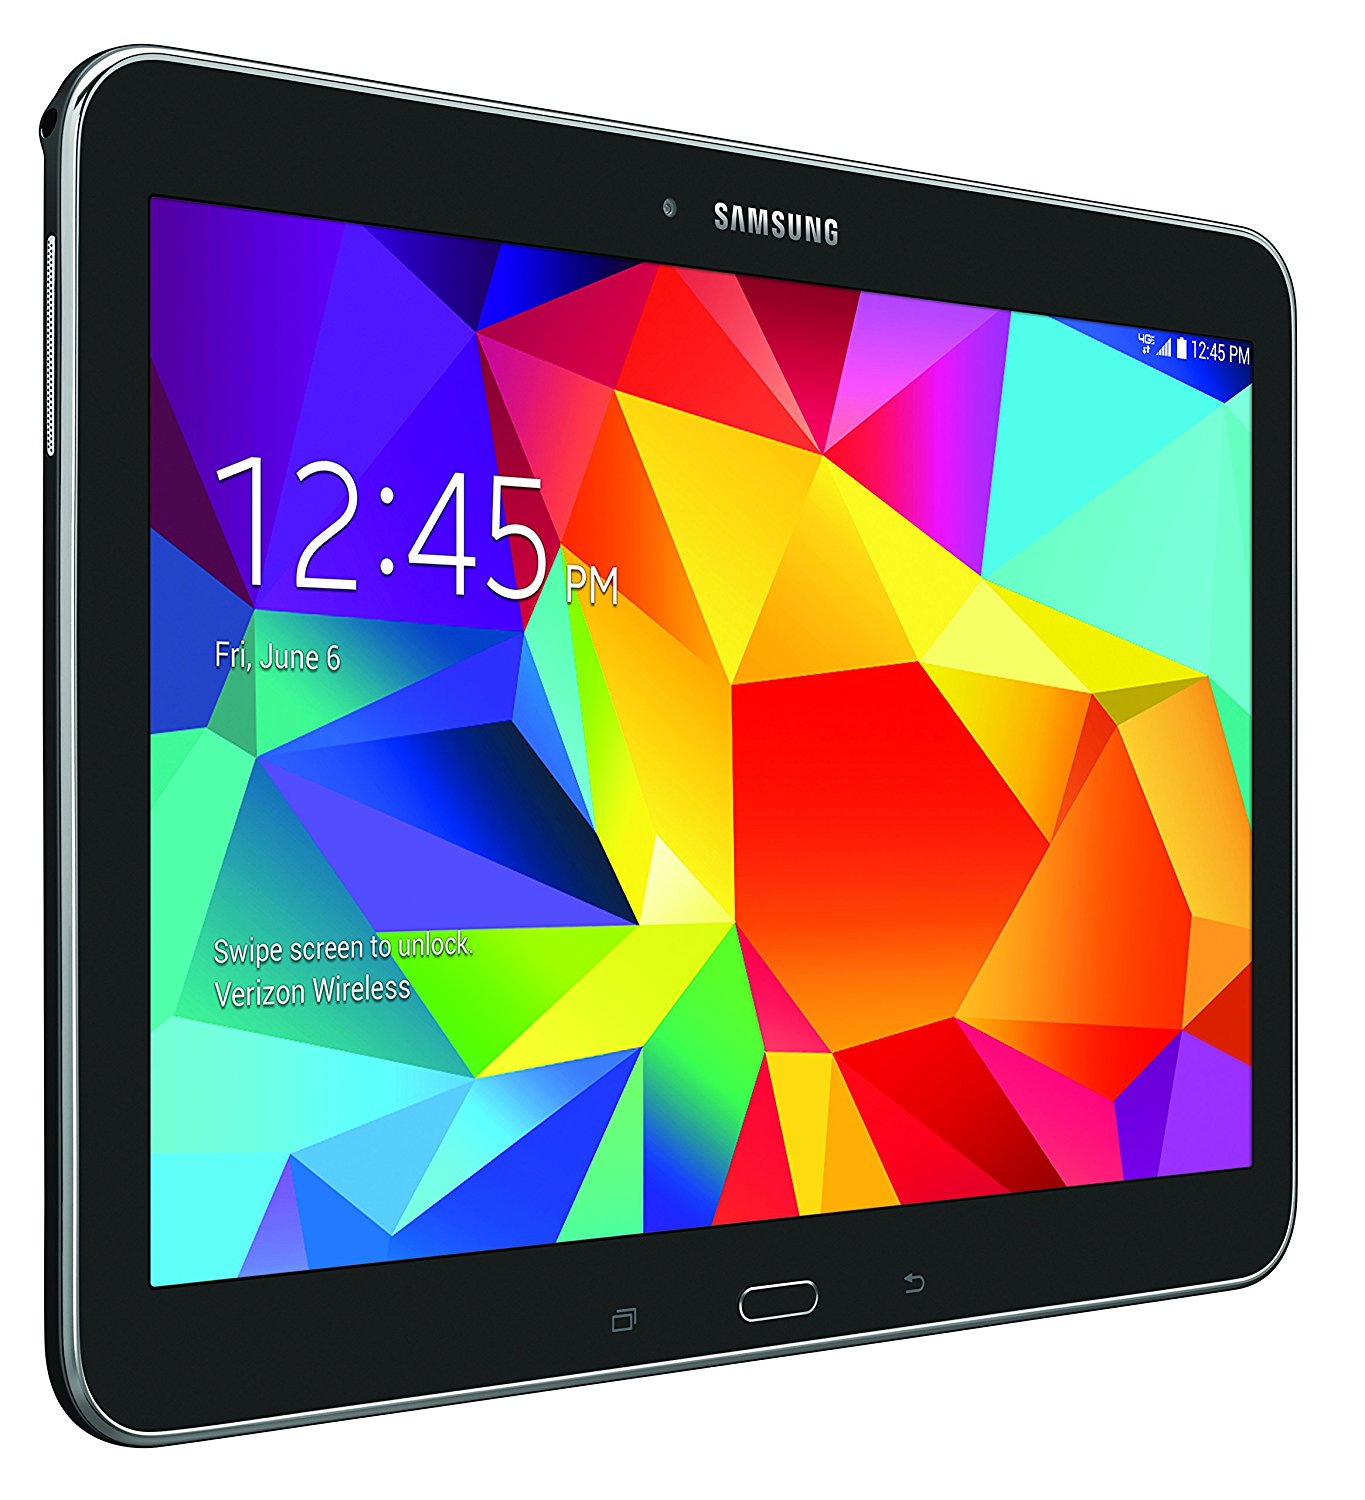 Amazon.com: Samsung Galaxy Tab 4 4G LTE Tablet, Black 10.1-Inch 16GB ...